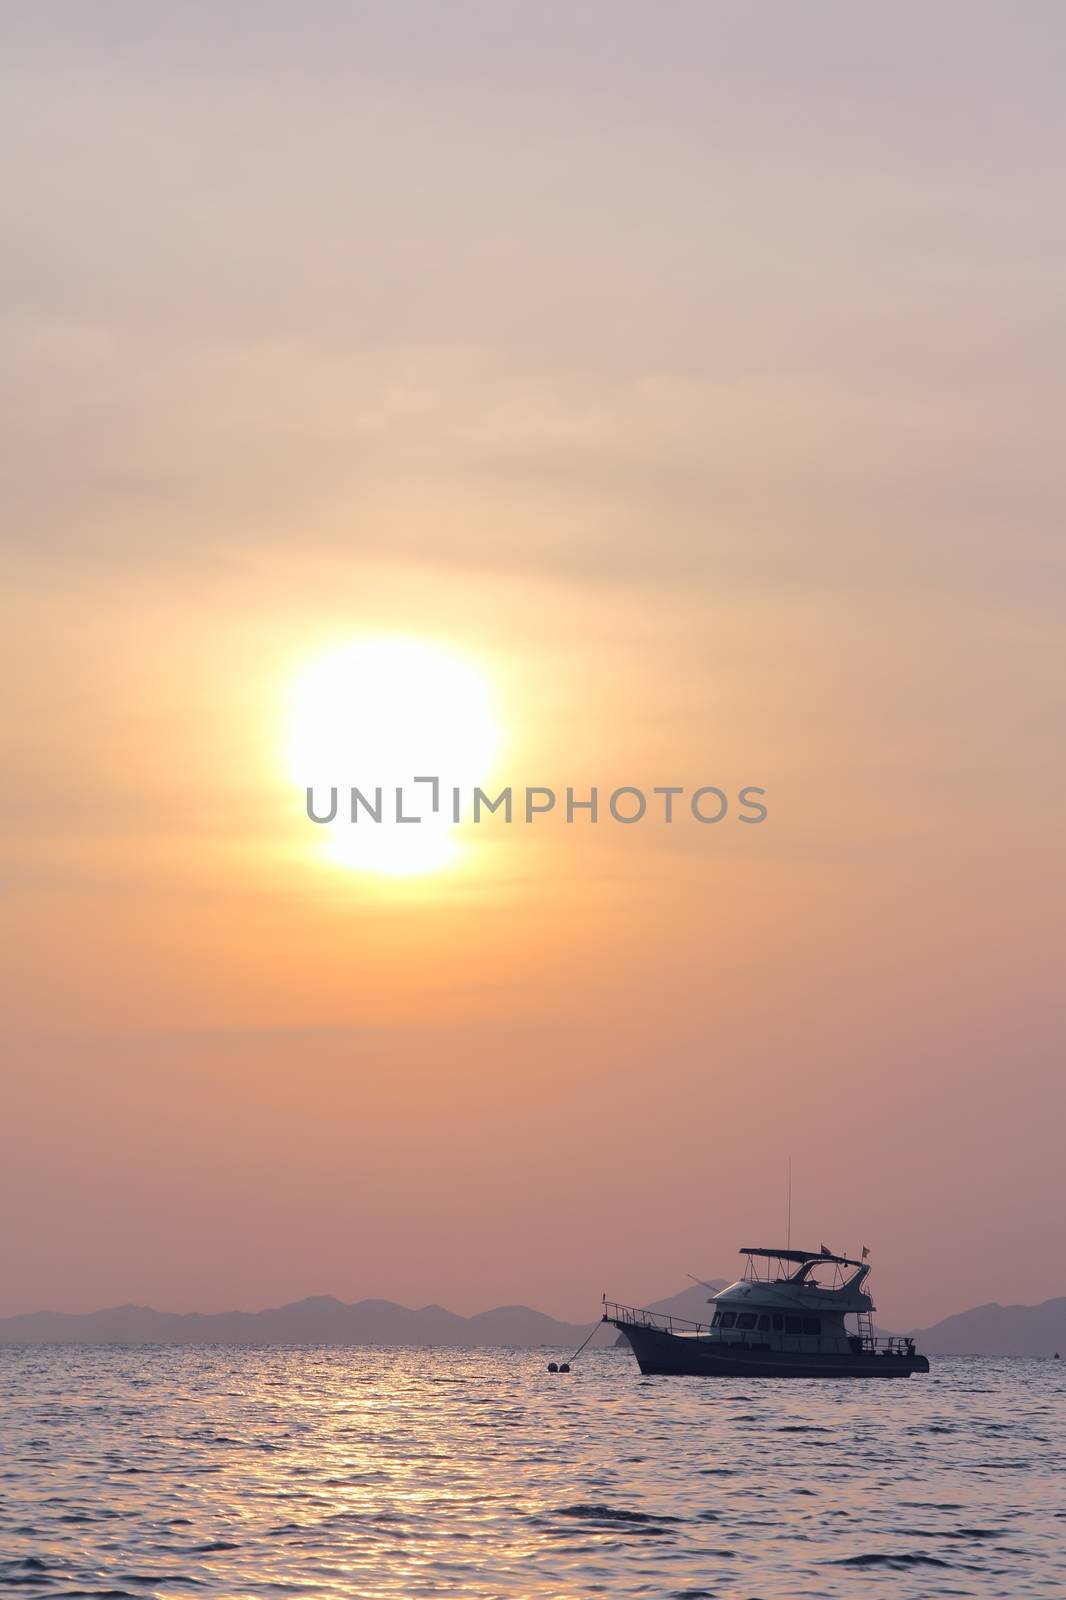 Sailing yaht in open sea on beautiful sunset sky background